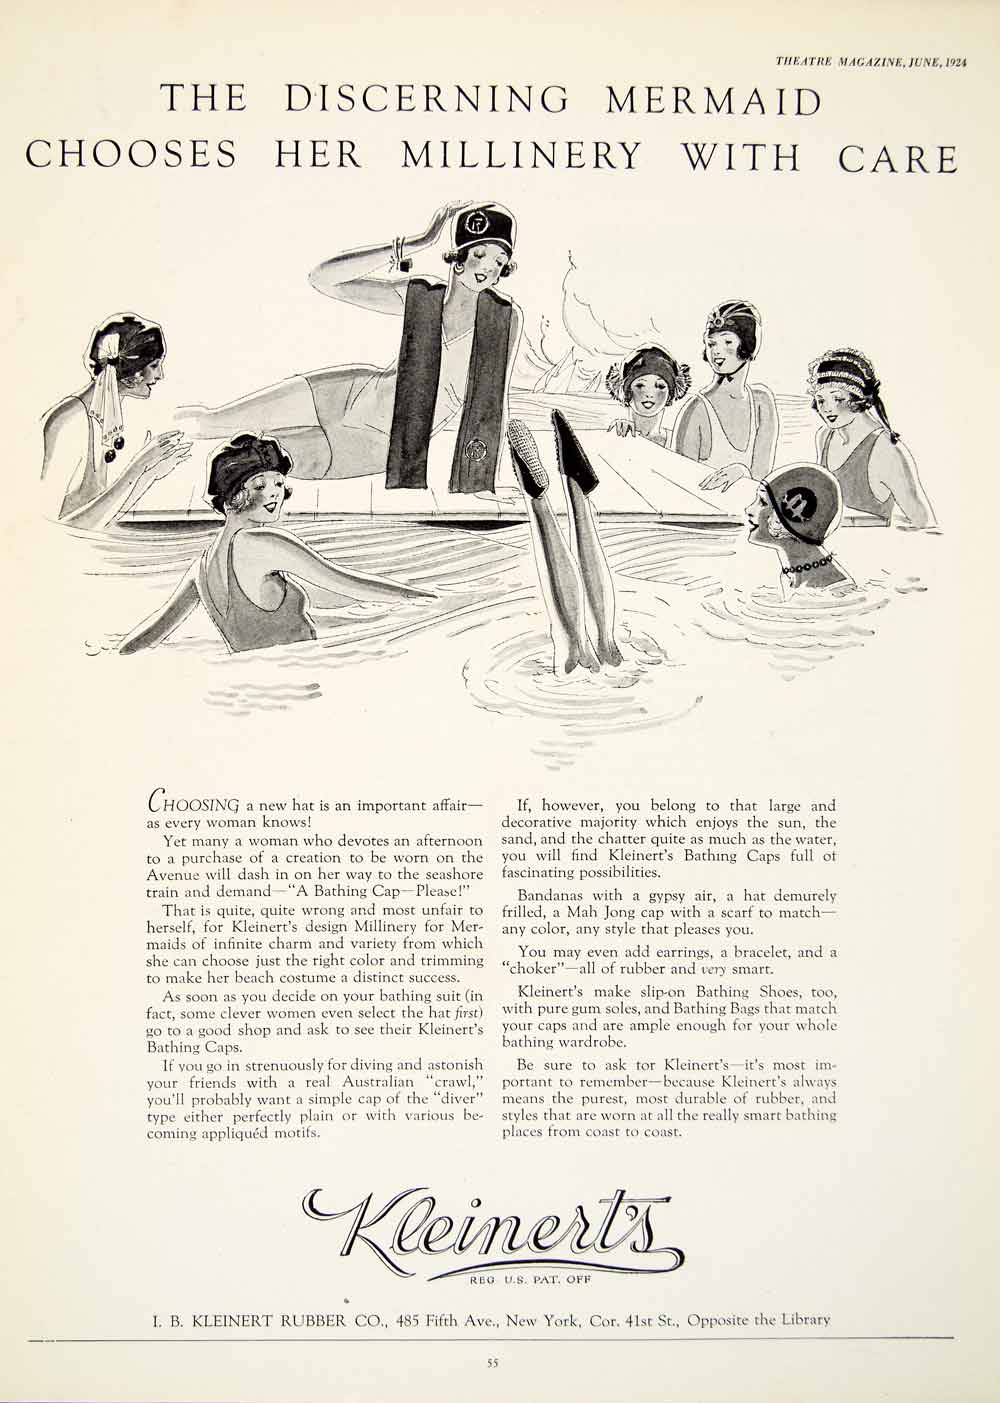 1940 Ad Direct Products Girdle Foundation Undergarment Thynmold